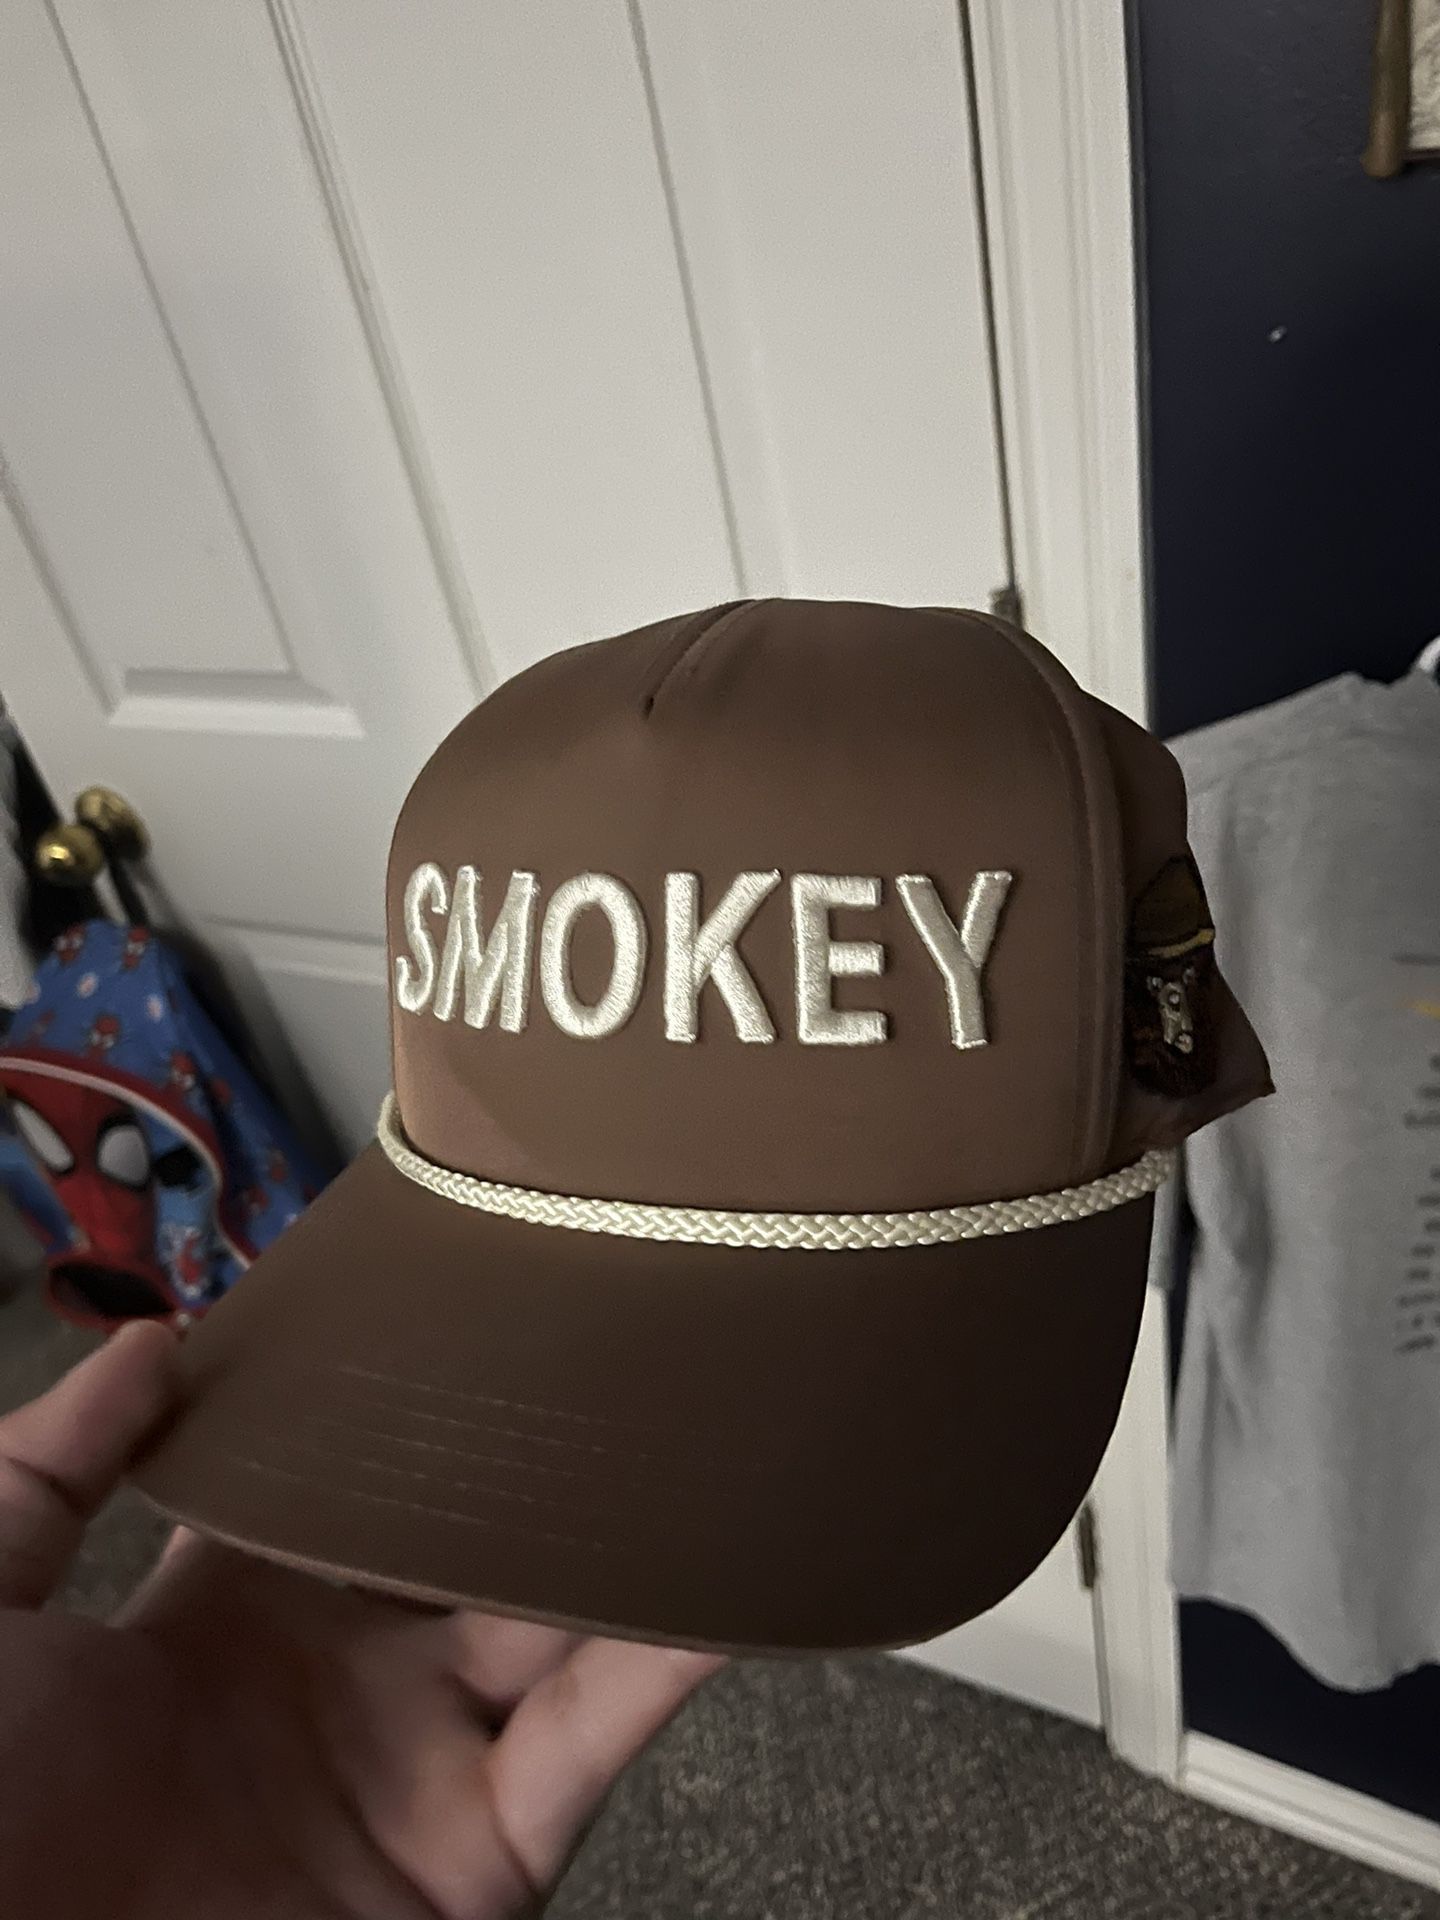 Smokey the bear hat